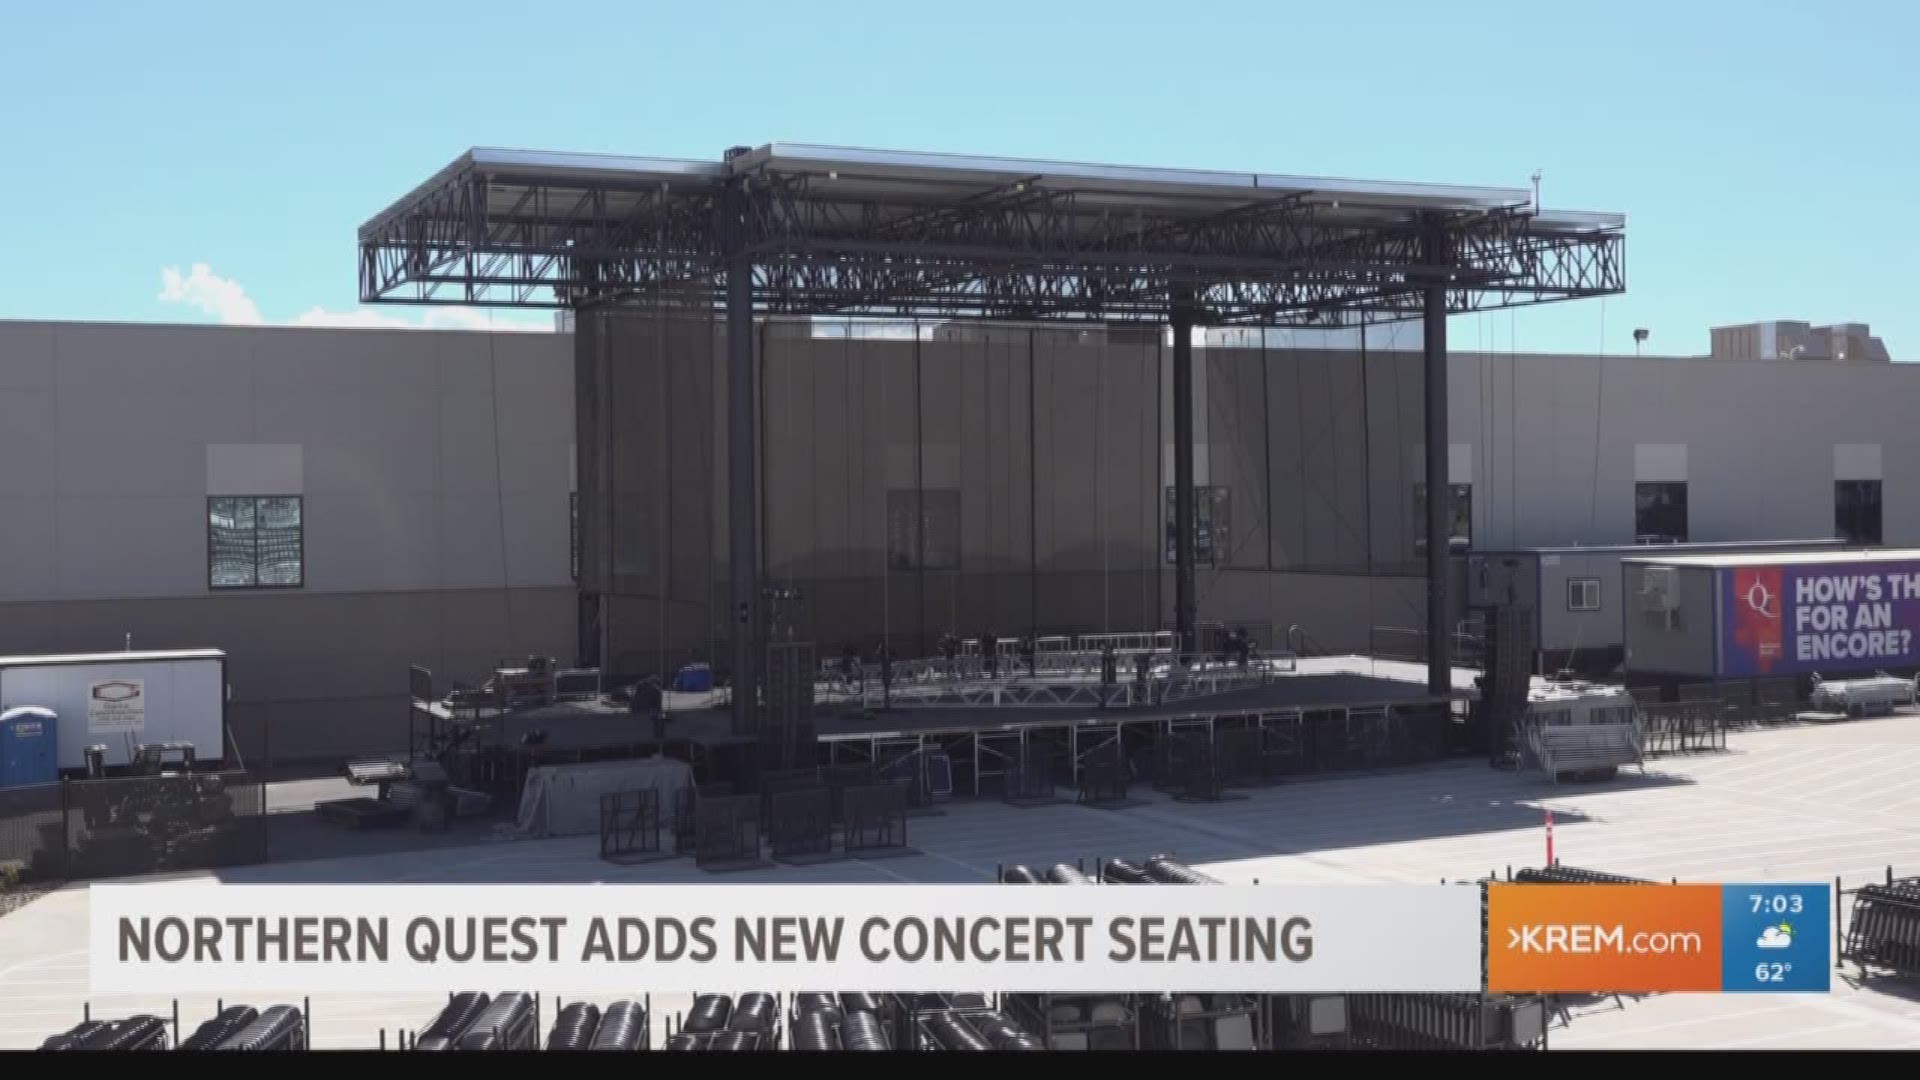 Northern Quest adds new concert seating to venue krem com